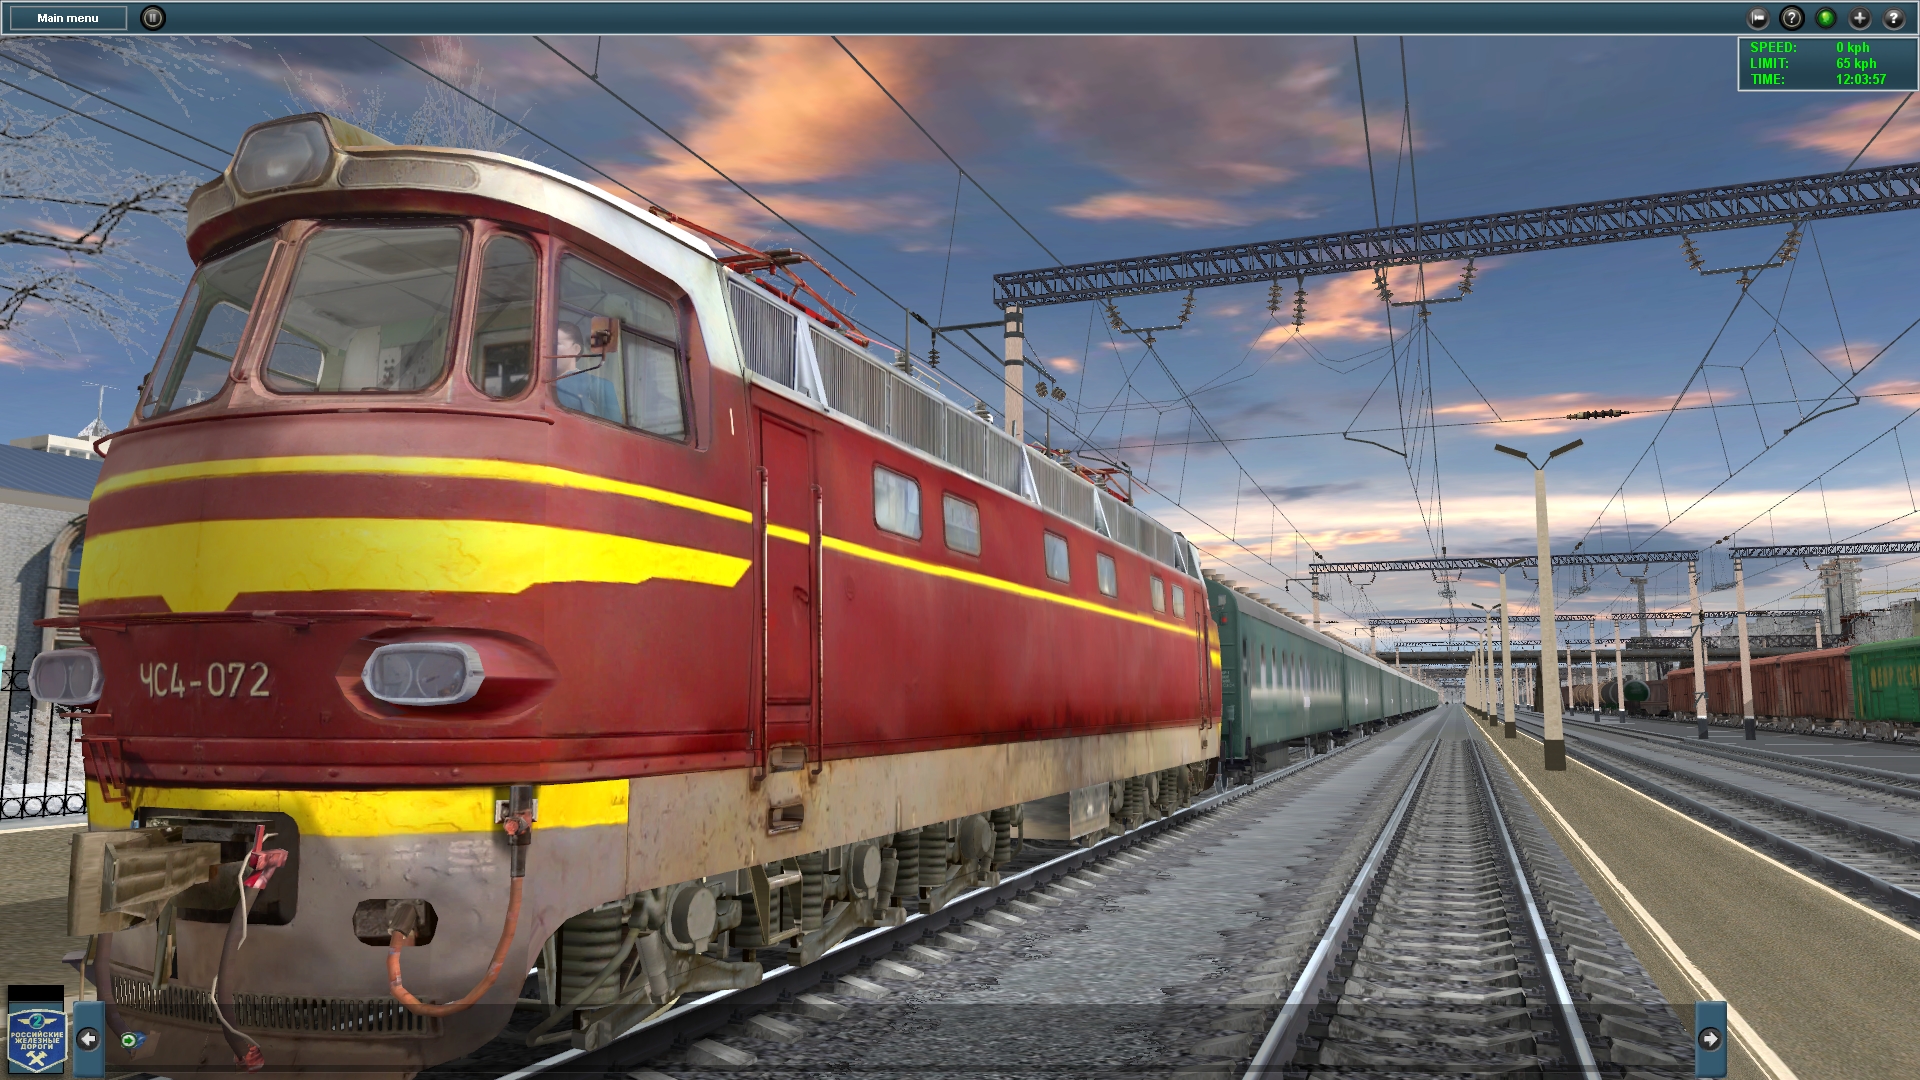 Trainz Simulator 12 screenshot